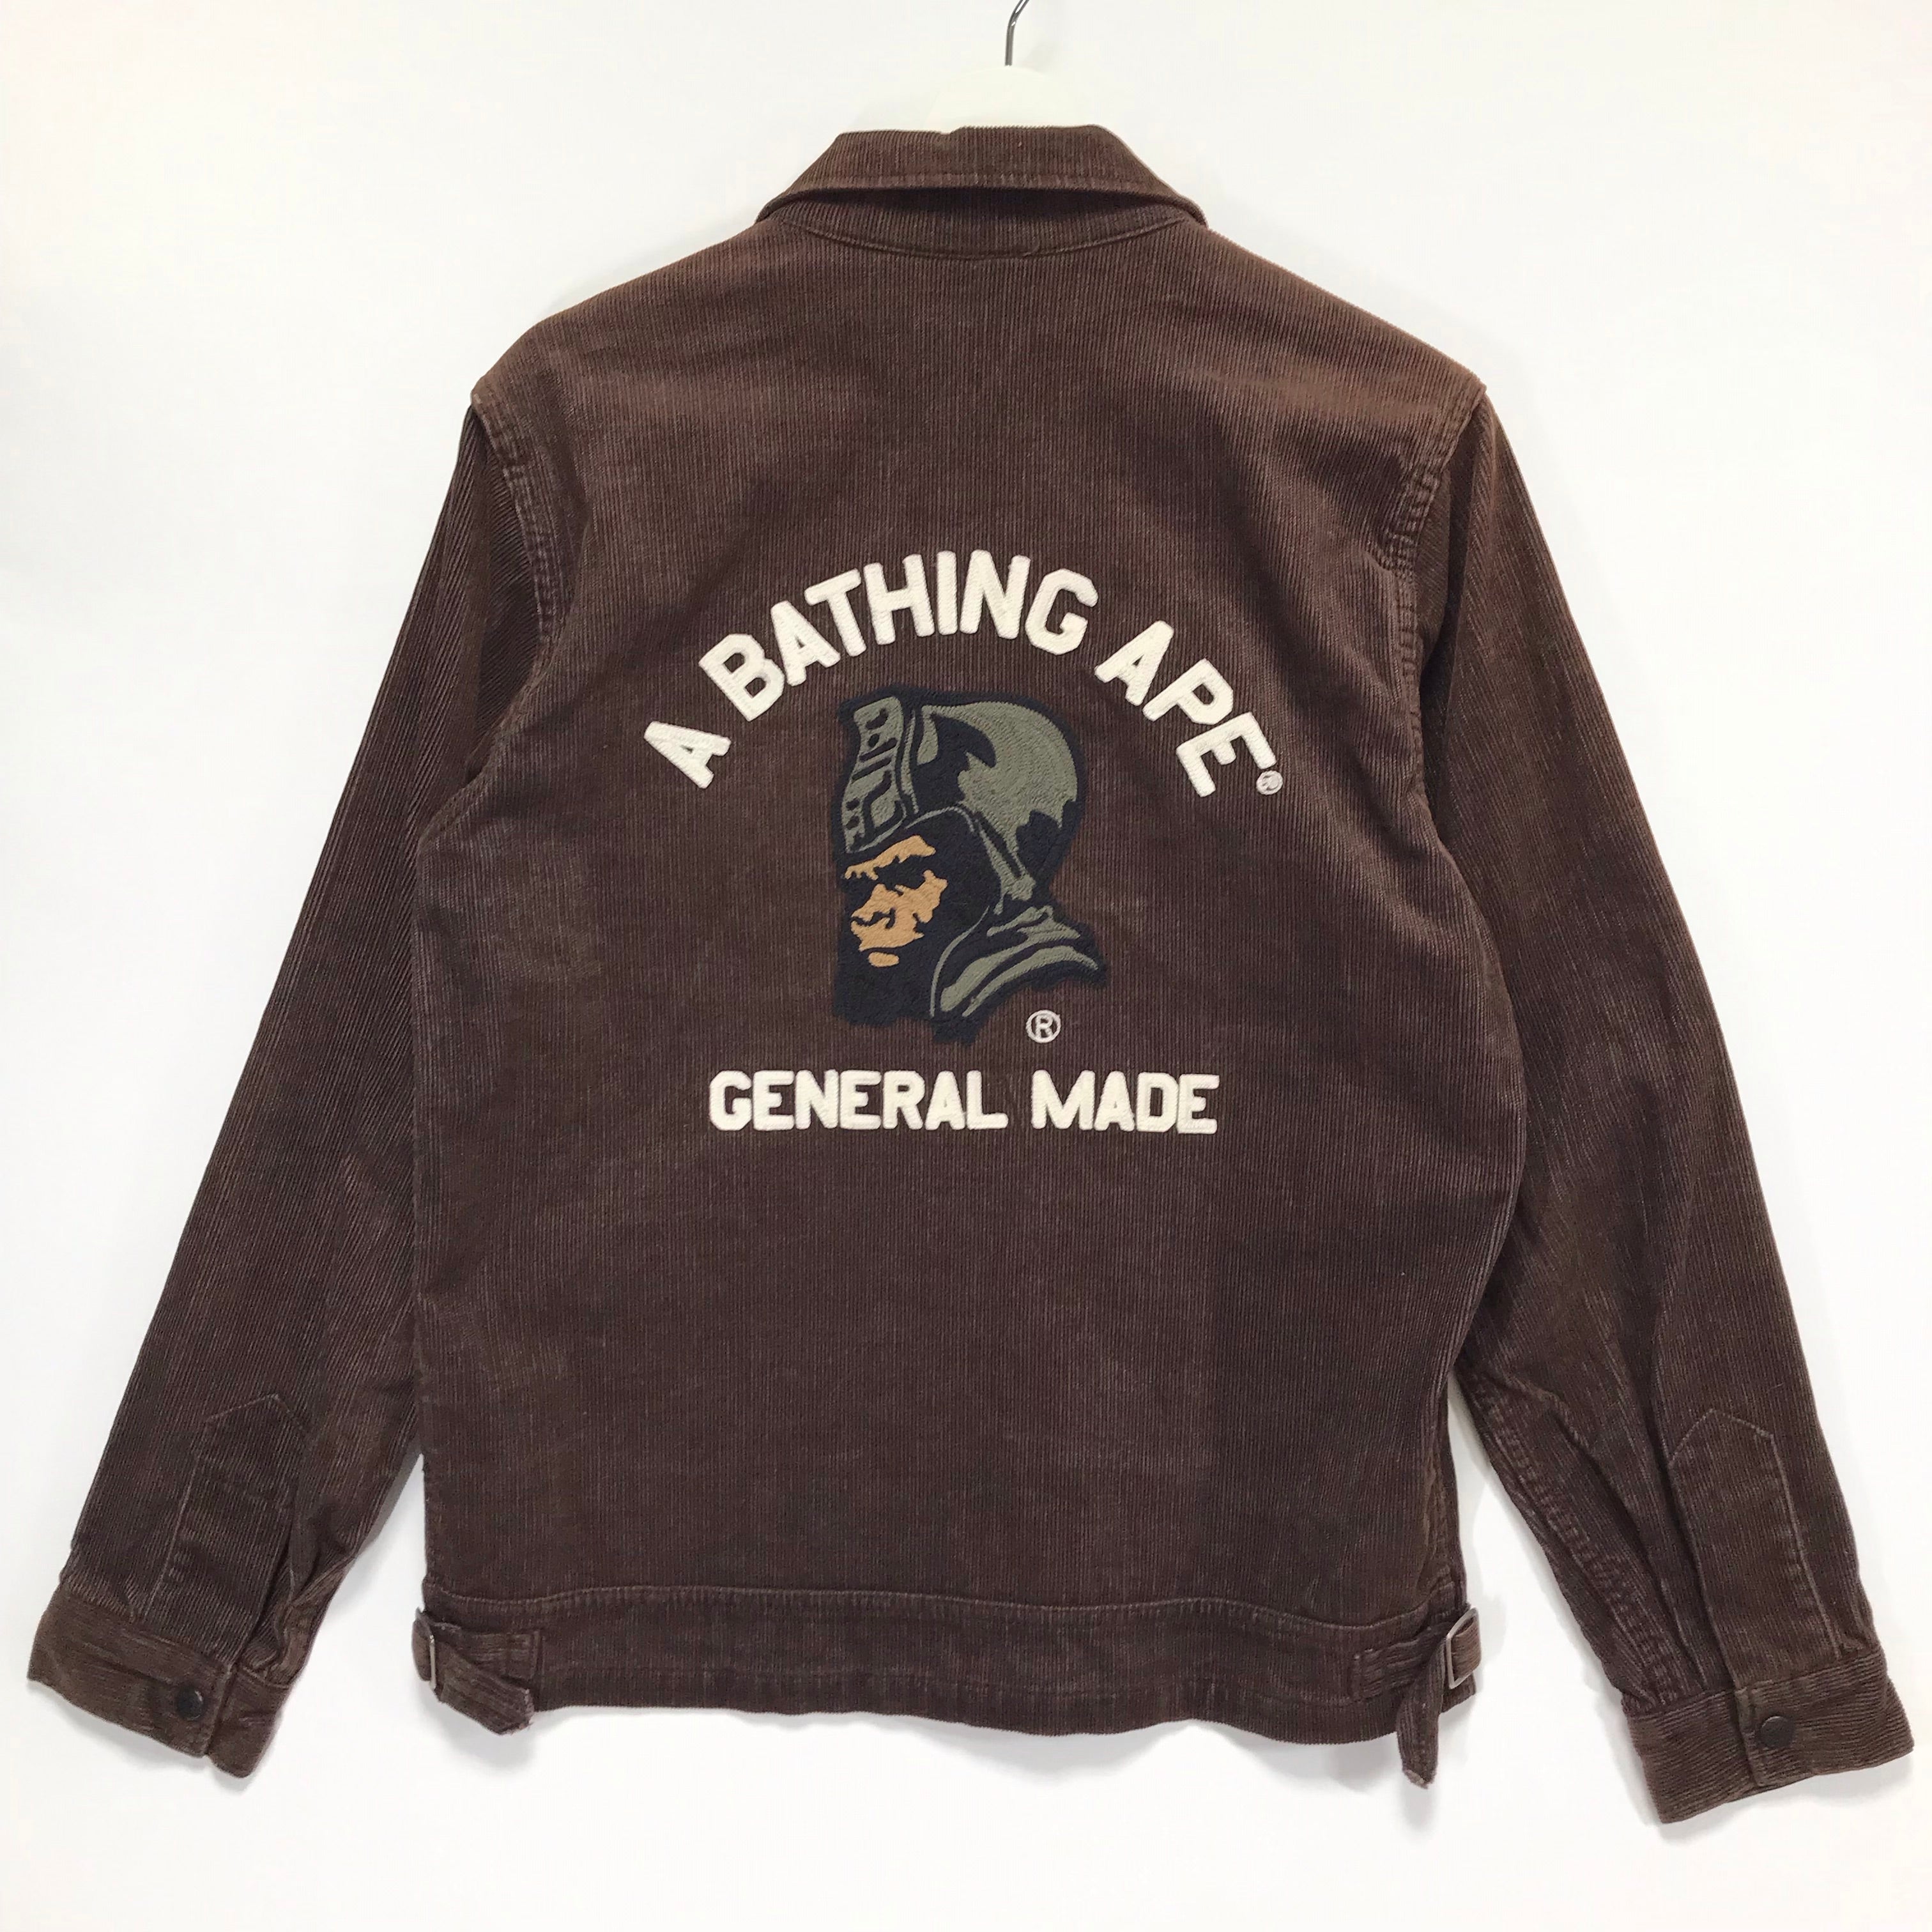 M] A Bathing Ape Bape General Made Corduroy Jacket Brown